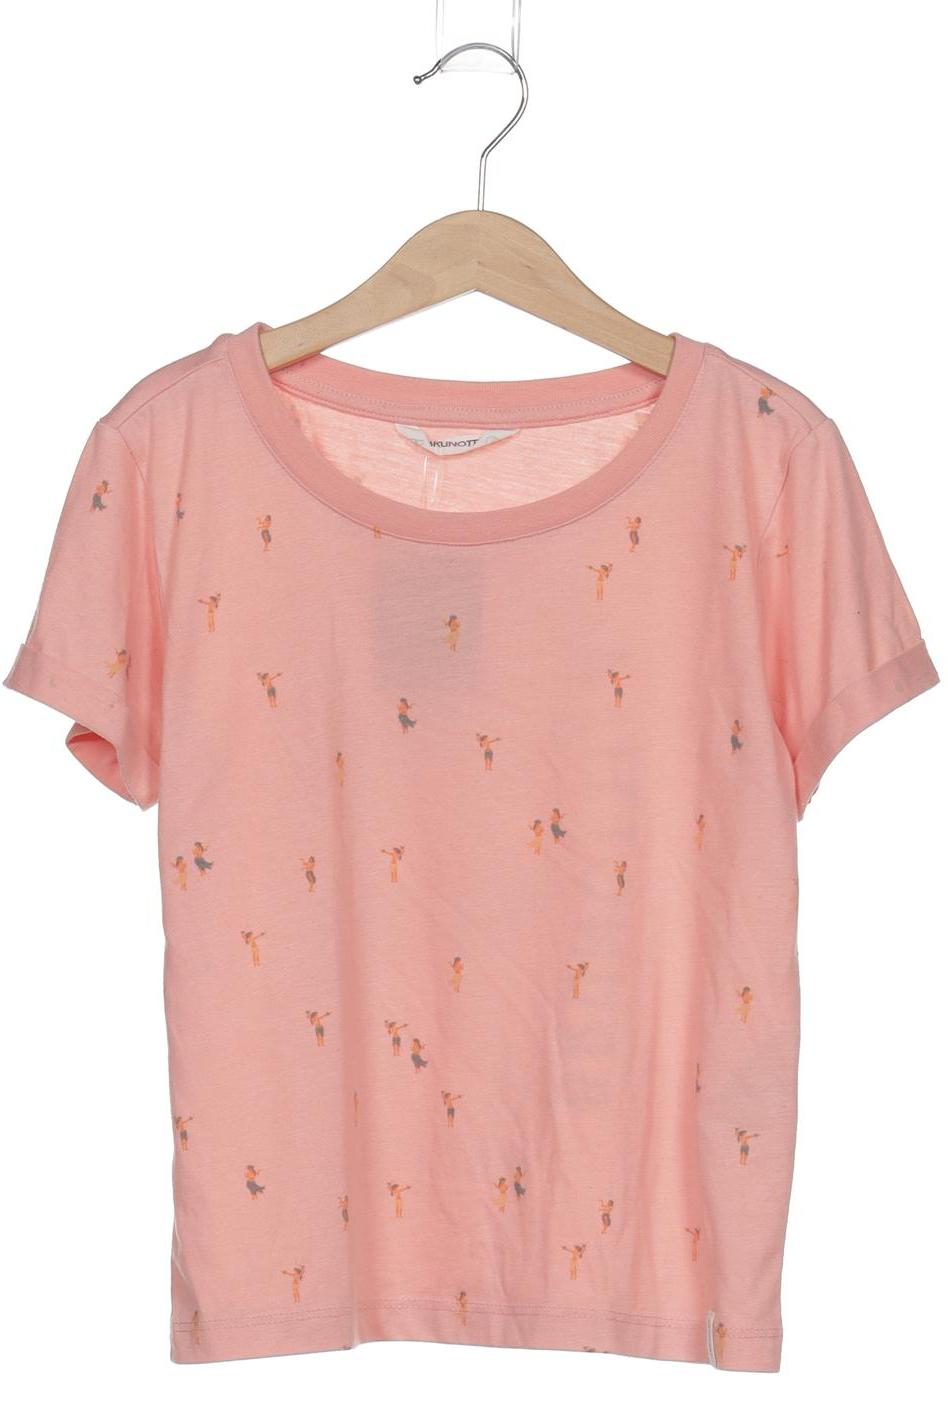 Brunotti Damen T-Shirt, pink, Gr. 140 von brunotti